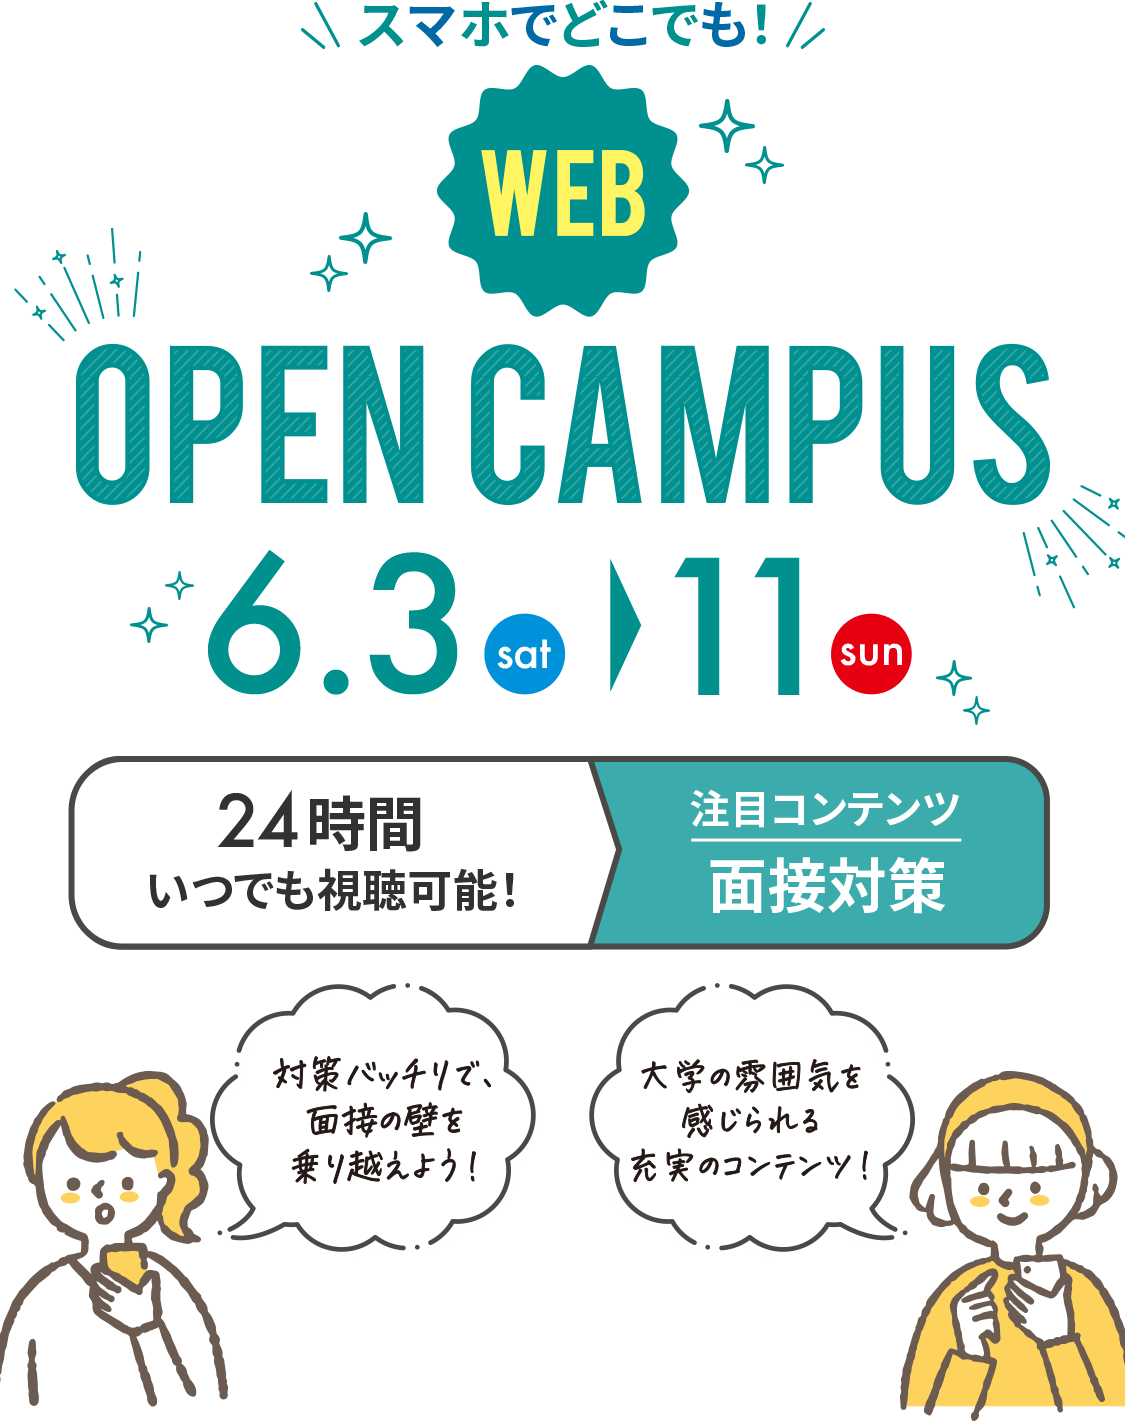 web open campus